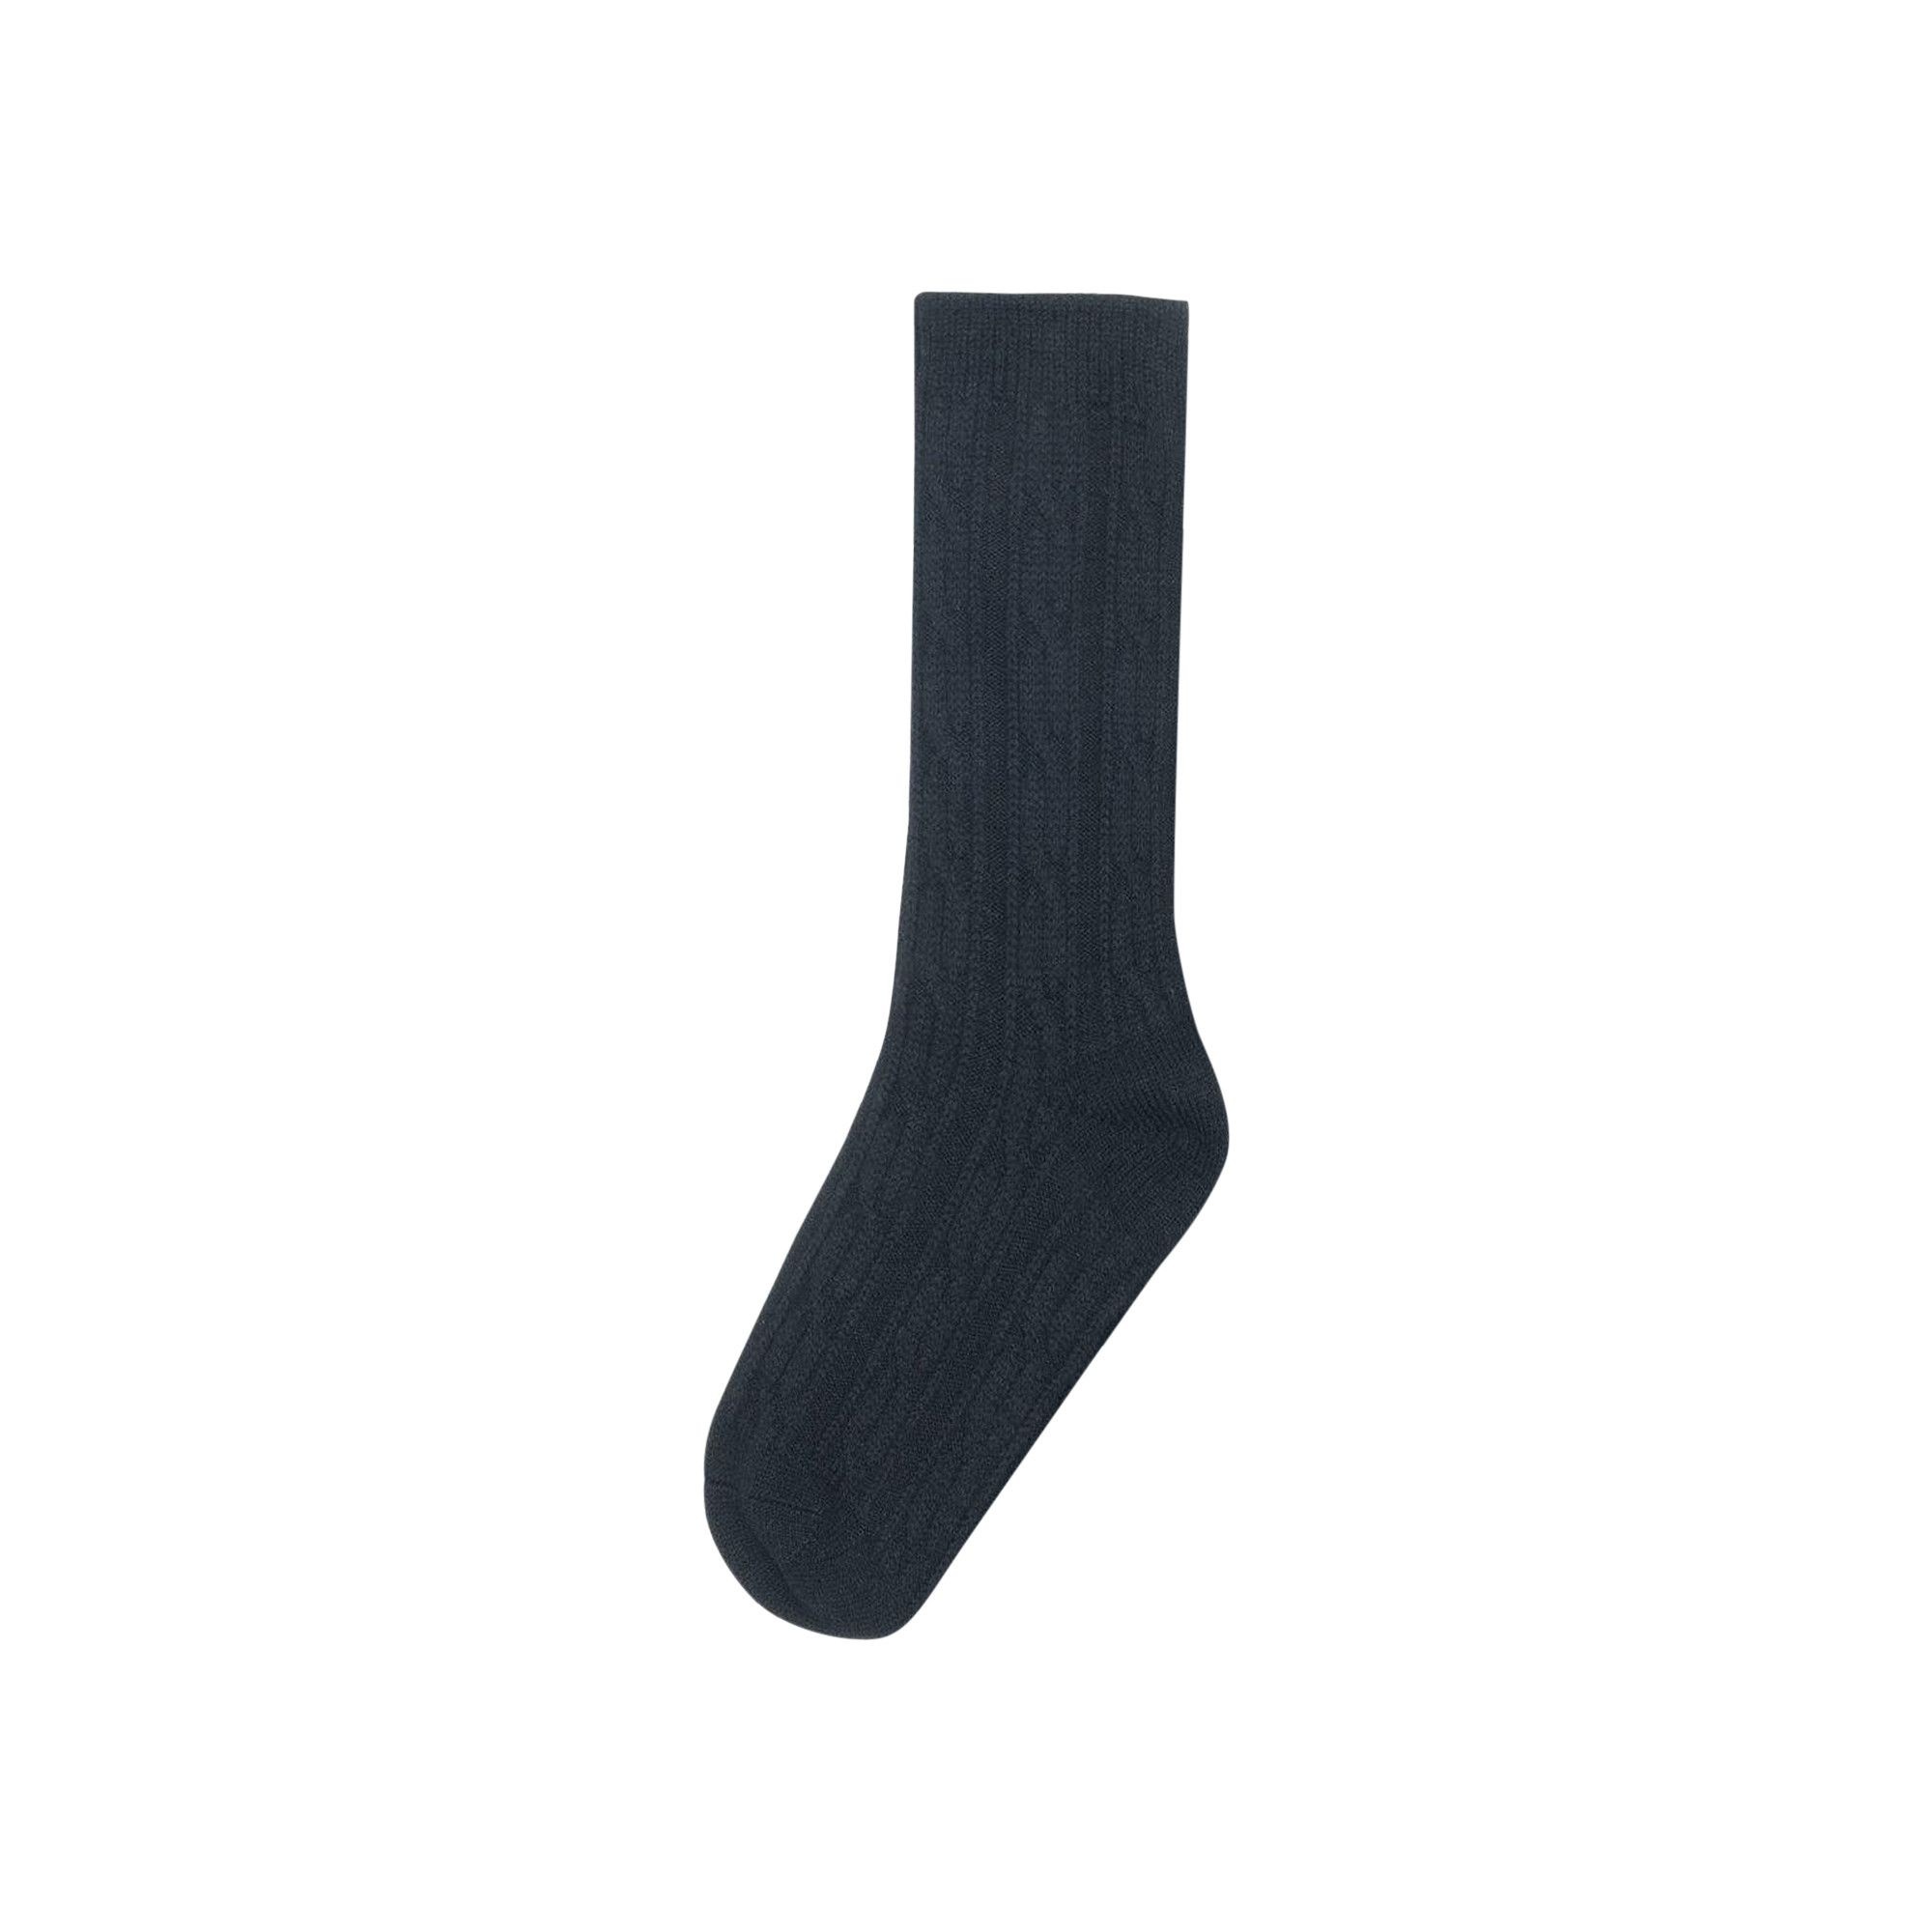 Stussy Cable Knit S Dress Socks 'Black' - 1